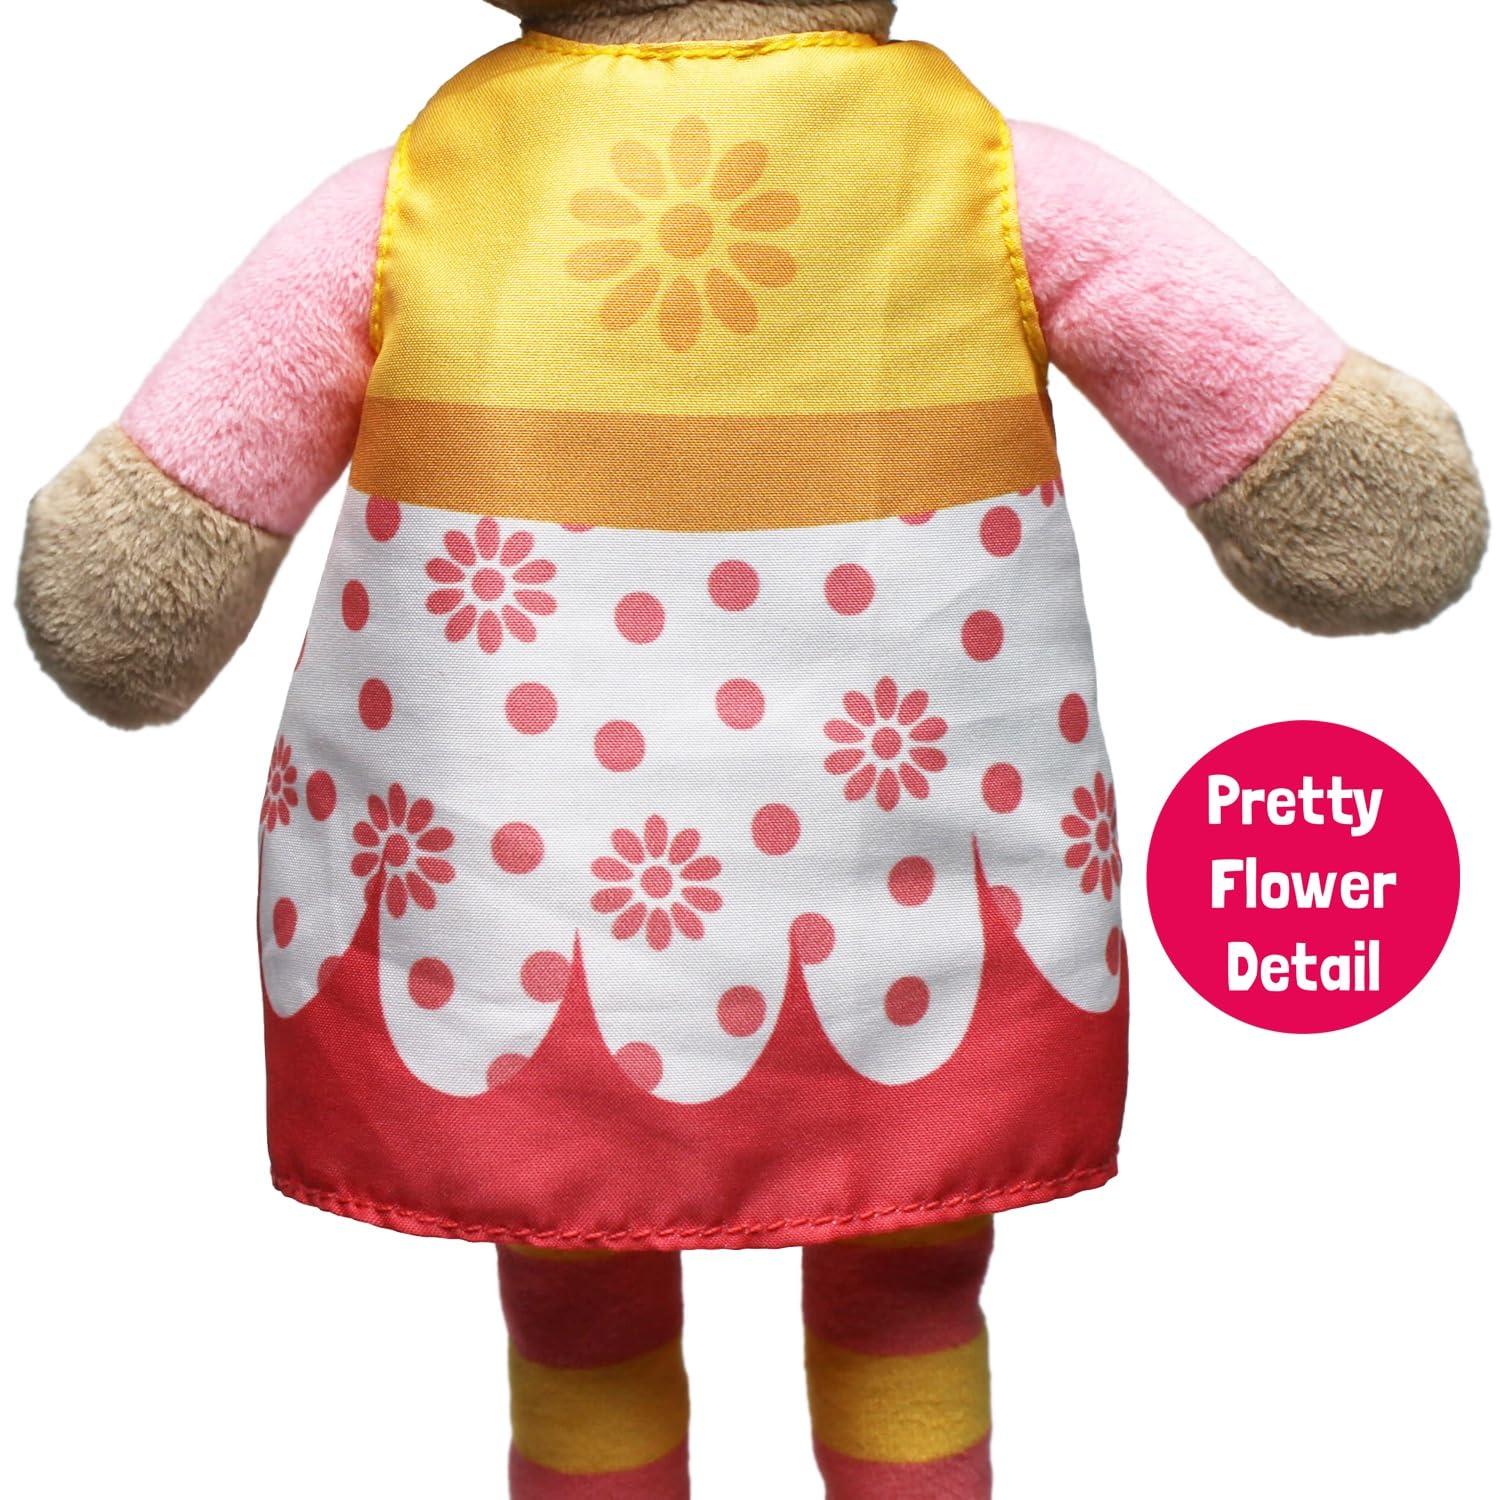 In The Night Garden Upsy Daisy Talking Teddy Bear Soft Plush Toy